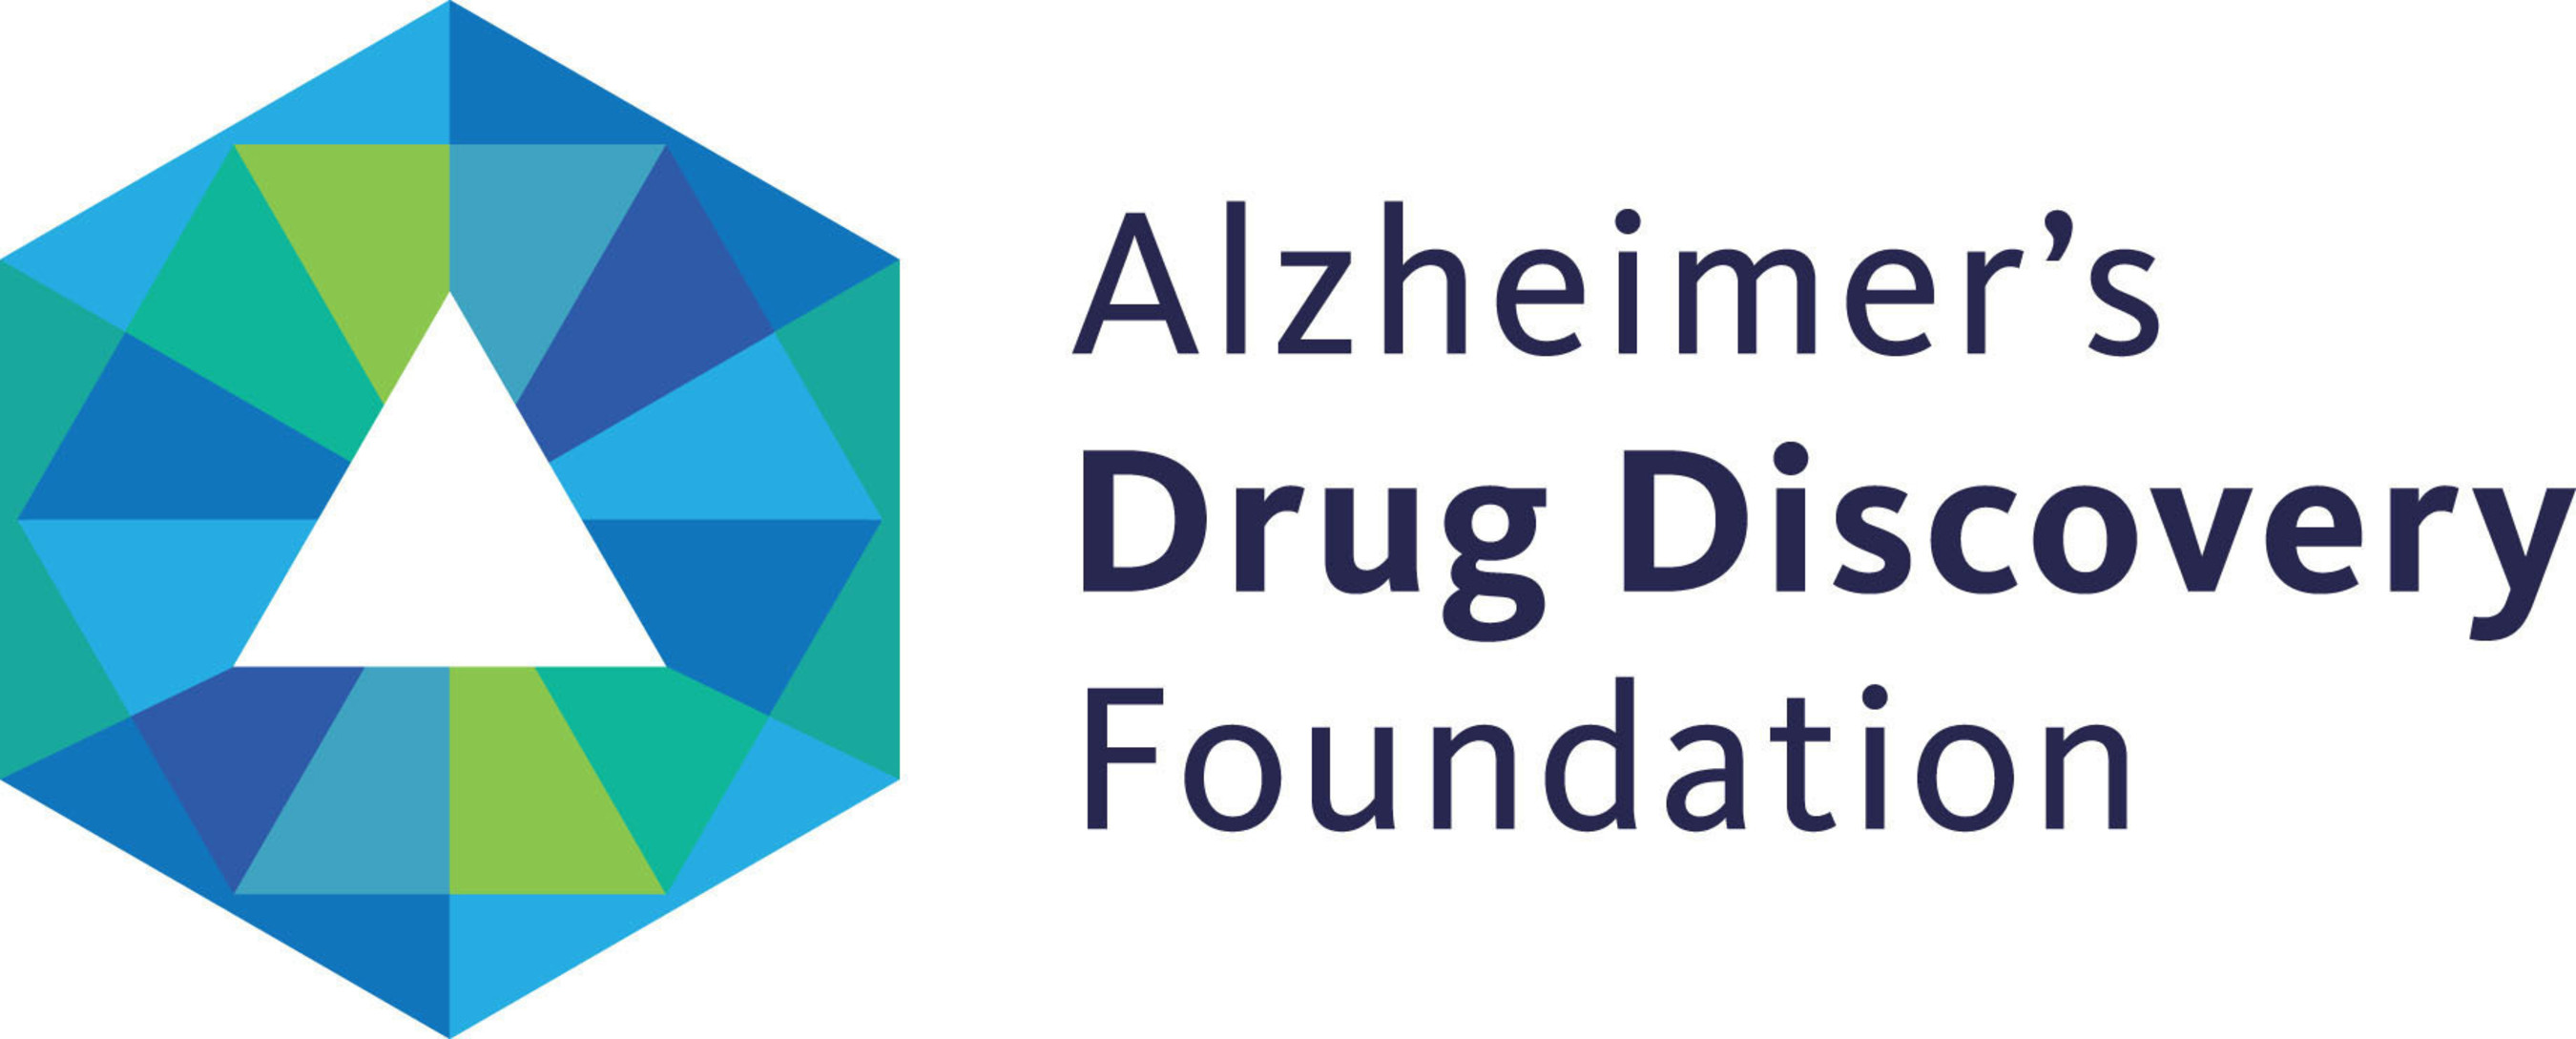 Alzheimer's Drug Discovery Foundation.